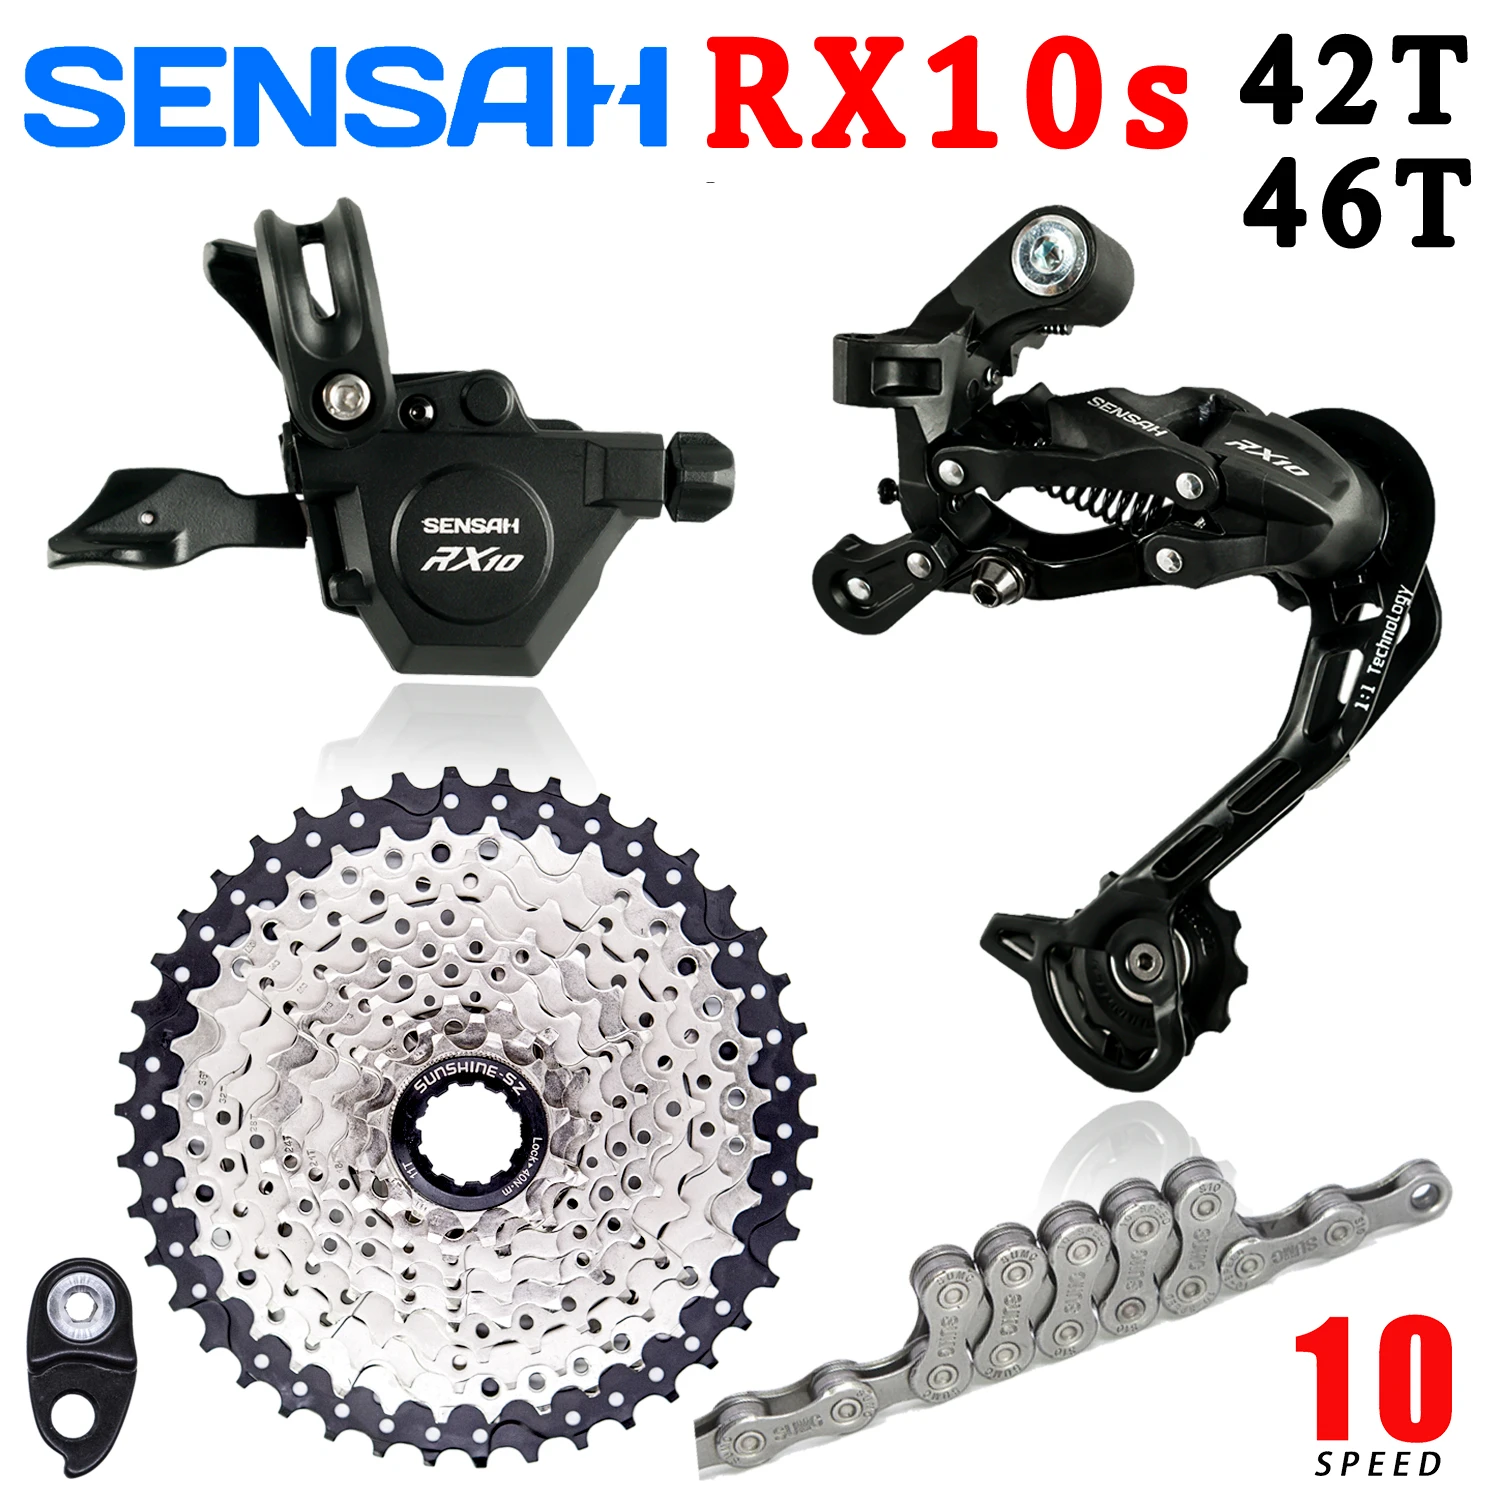 SENSAH RX10 1x10 Speed Bike MTB Shifter Derailleurs 42T / 46T 10V K7 Cassette Chain A5 A7 Bicycle Groupset SHIMANO Deore M6000